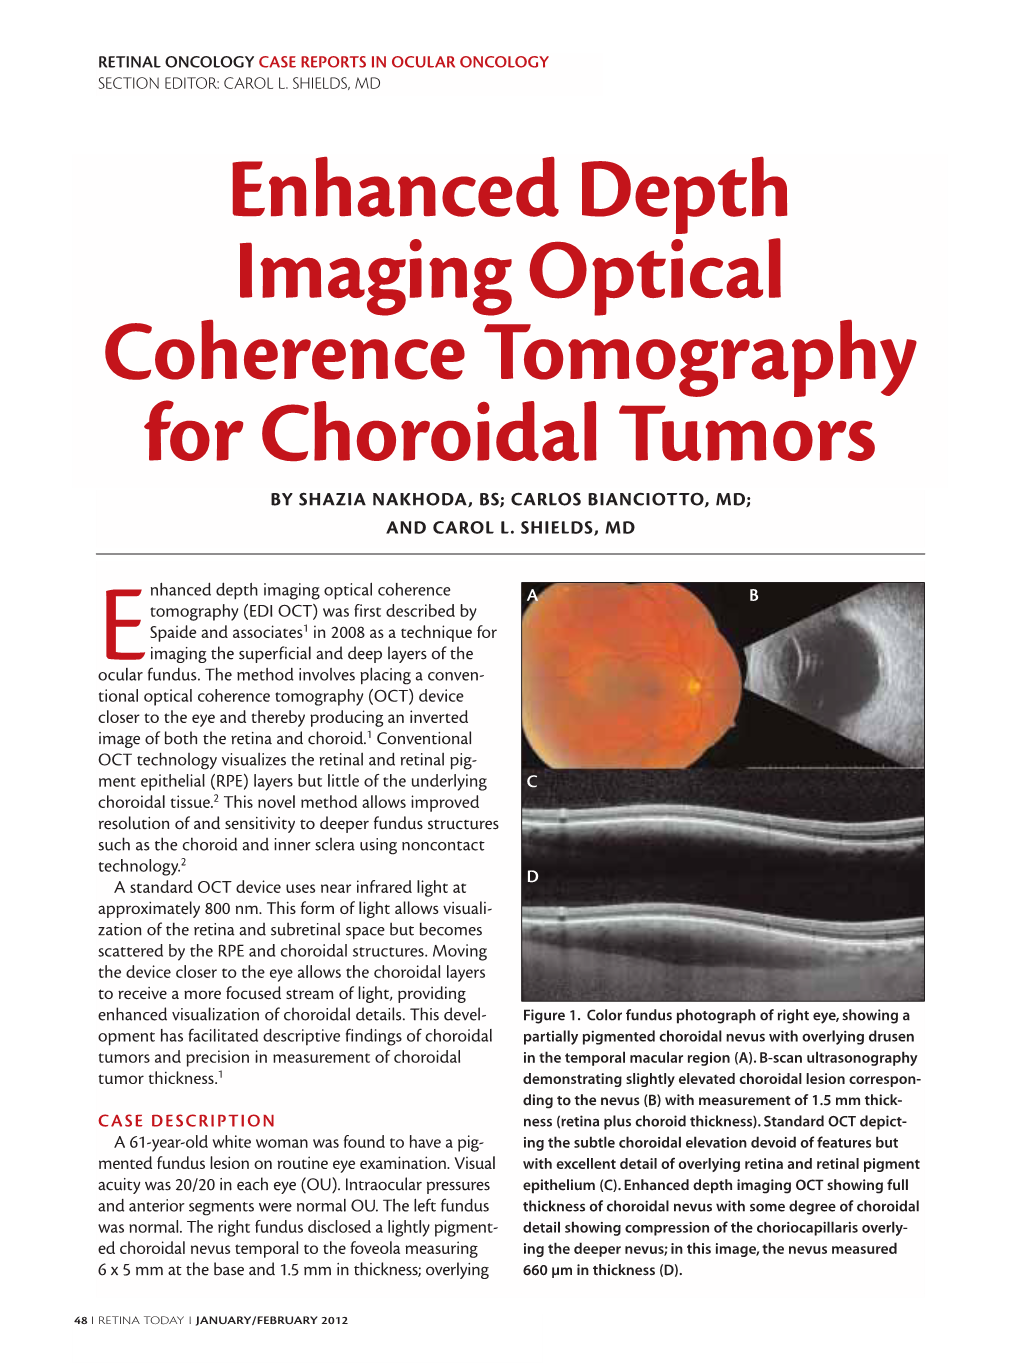 Enhanced Depth Imaging Optical Coherence Tomography for Choroidal Tumors by SHAZIA NAKHODA, BS; CARLOS BIANCIOTTO, MD; and CAROL L